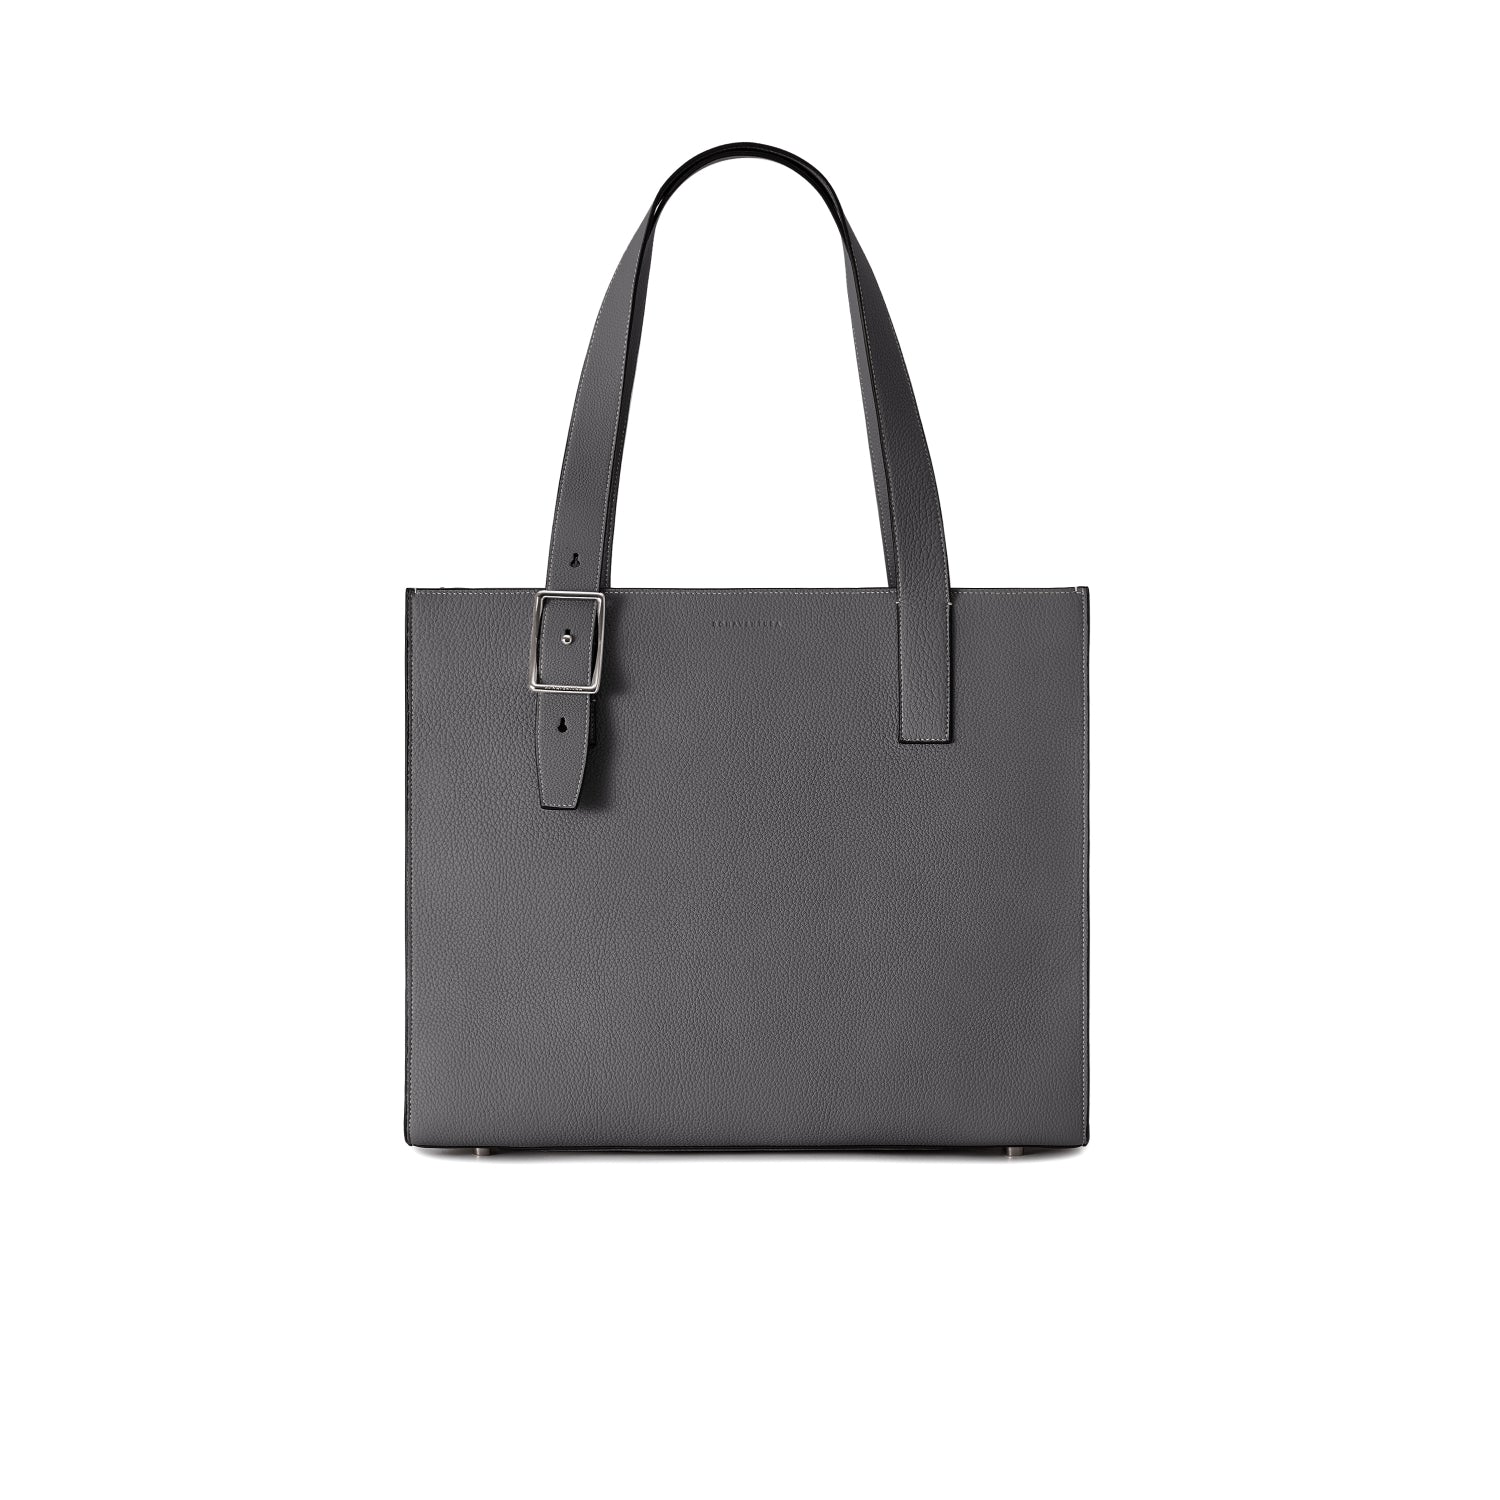 Nicola Tote Bag Shrink Leather Charcoal Grey